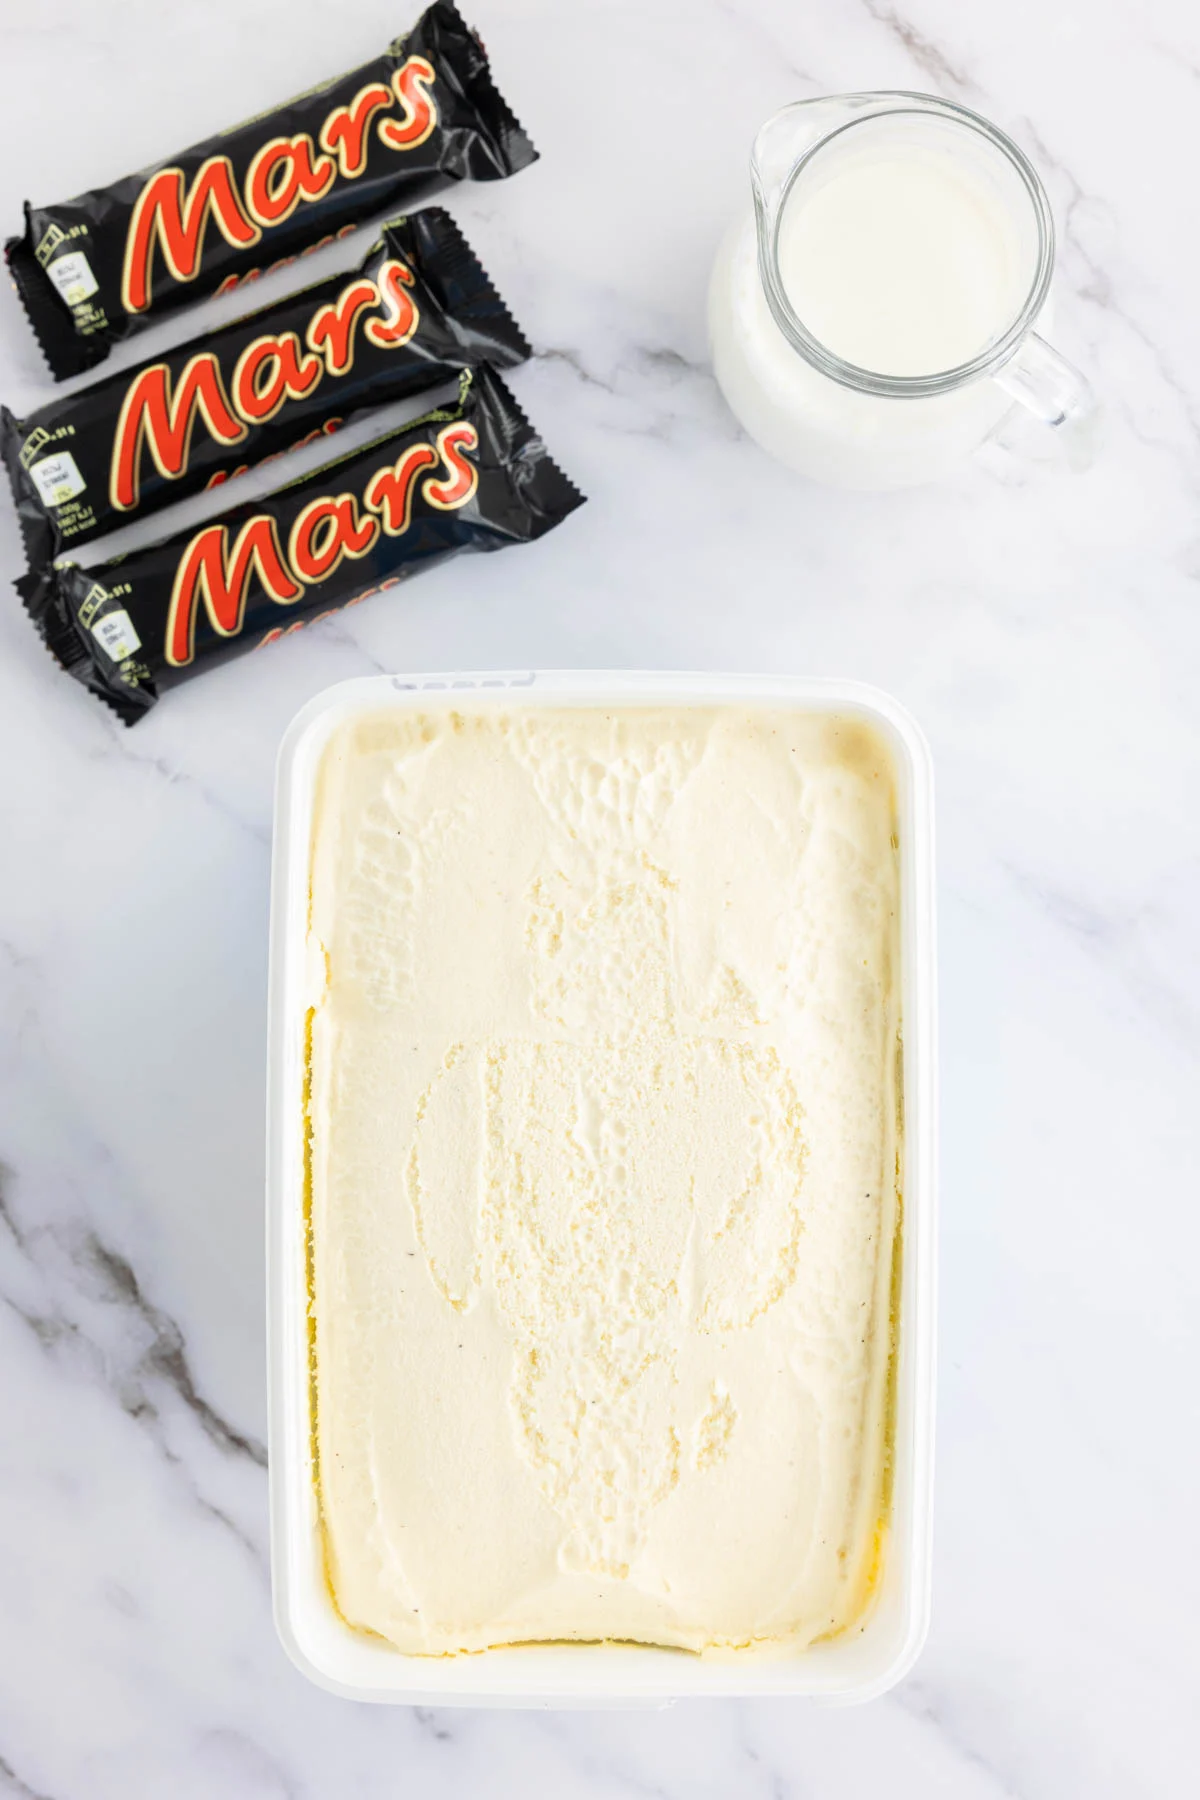 mars milkshake ingredients: mar bars, vanilla ice cream and milk